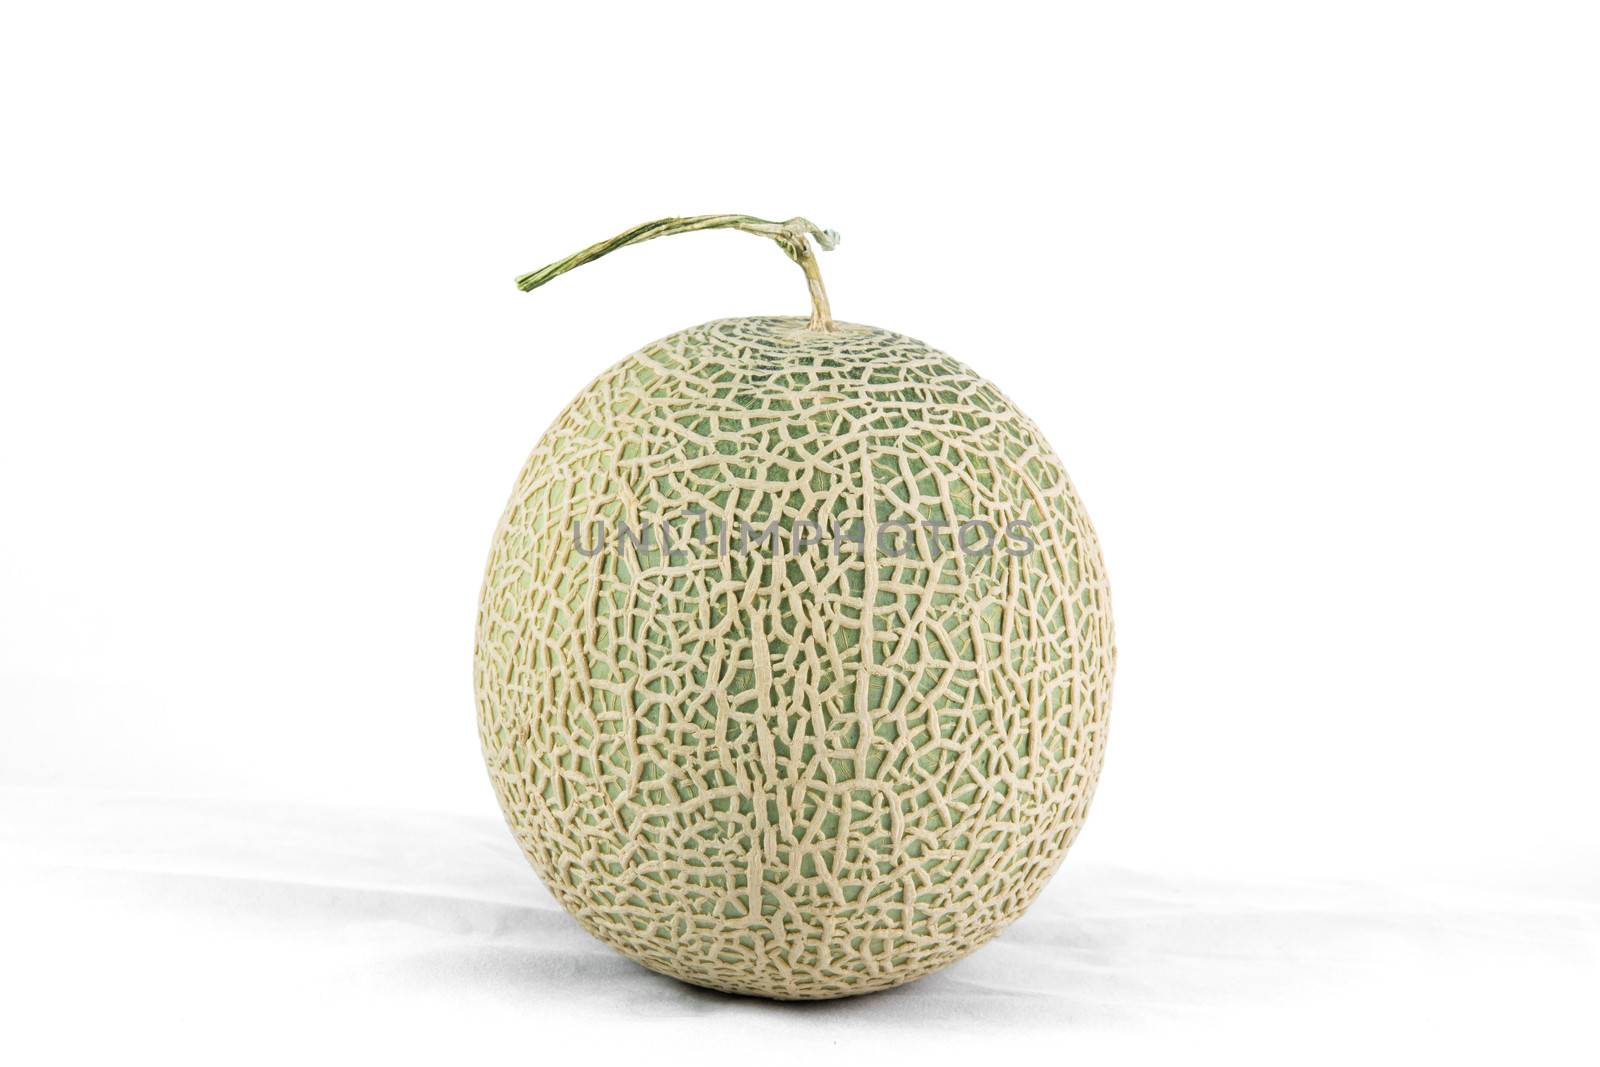 cantaloupe melon isolate on a white background